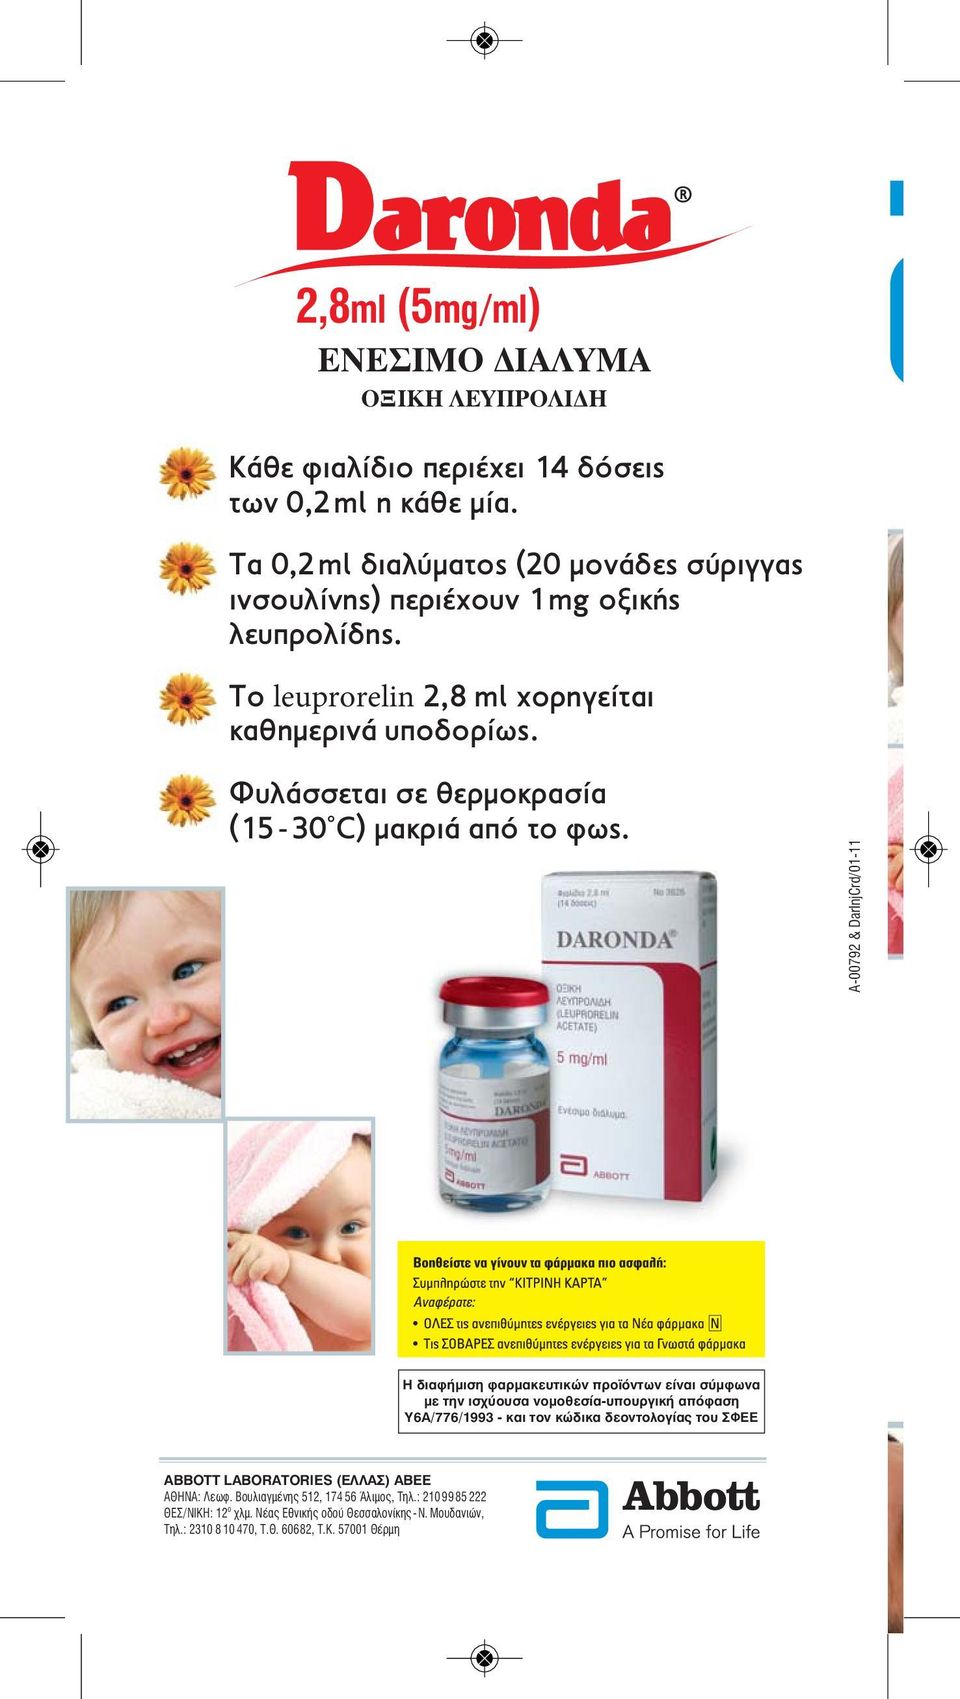 A-00792 & DarInjCrd/01-11 Η διαφήμιση φαρμακευτικών προϊόντων είναι σύμφωνα με την ισχύουσα νομοθεσία-υπουργική απόφαση Υ6Α/776/1993 - και τον κώδικα δεοντολογίας